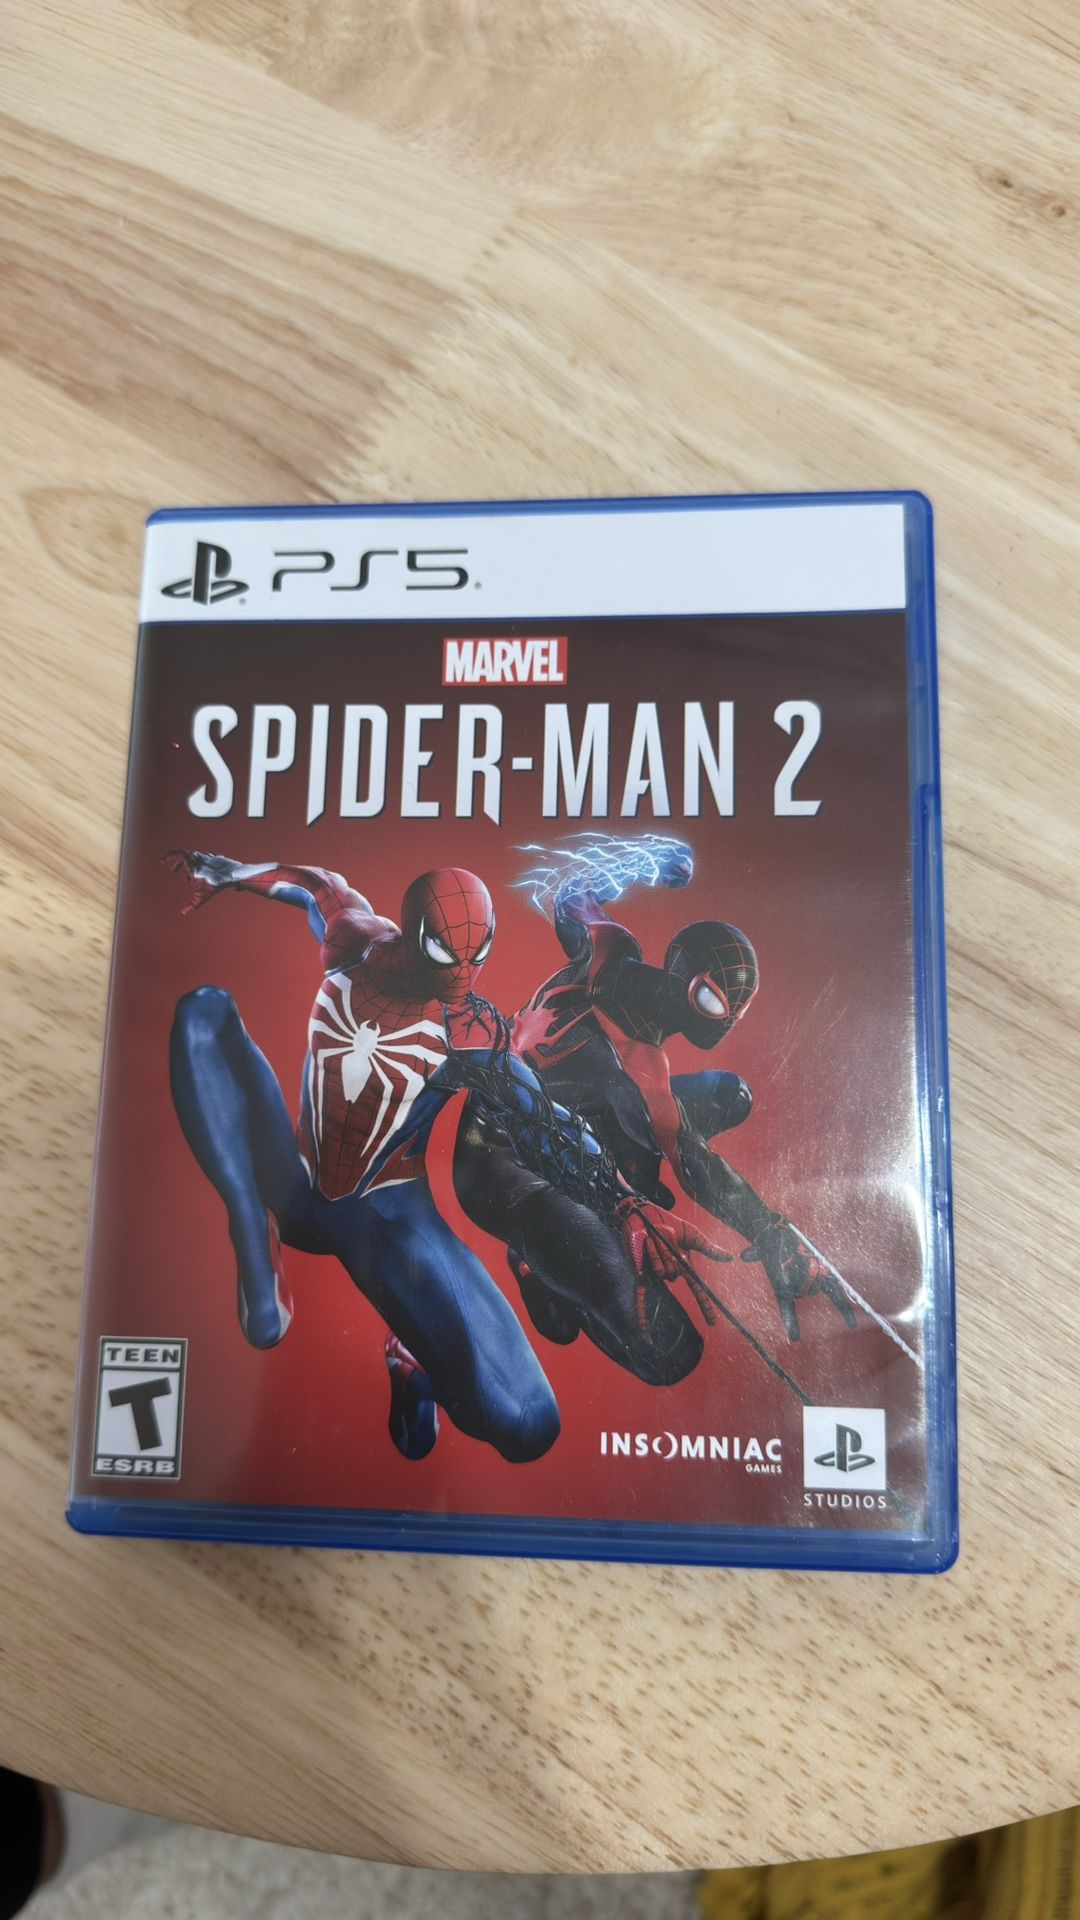  Marvel Spider-Man 2  (PS5 Game)